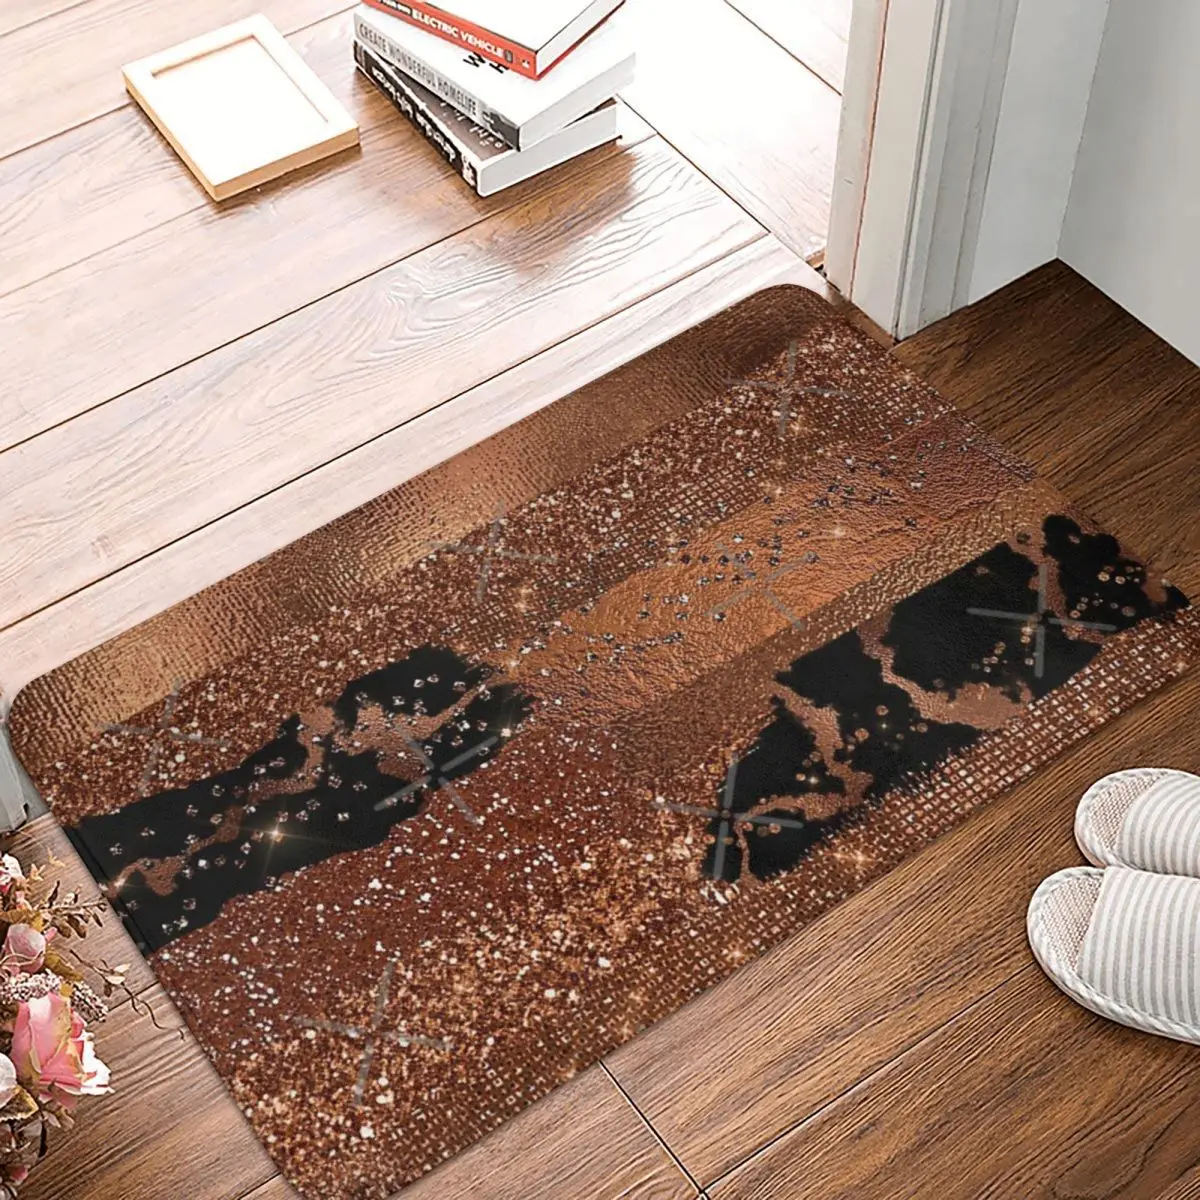 

Dark Faux Copper Glamour 60x40cm Carpet Polyester Floor Mats Cute Style Doorway Festivle Gifts